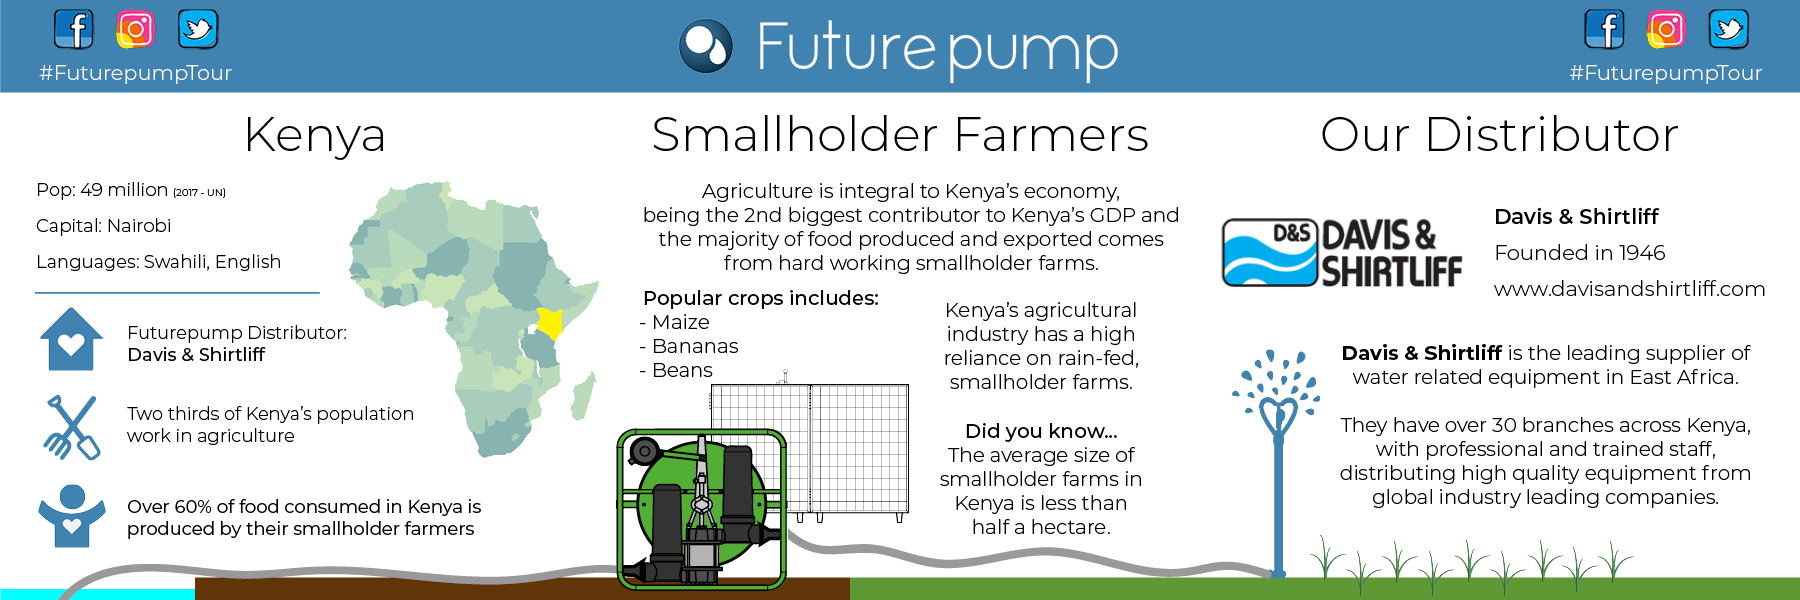 An infographic showing key information about Kenya solar pump distributor Davis & Shirtlliff